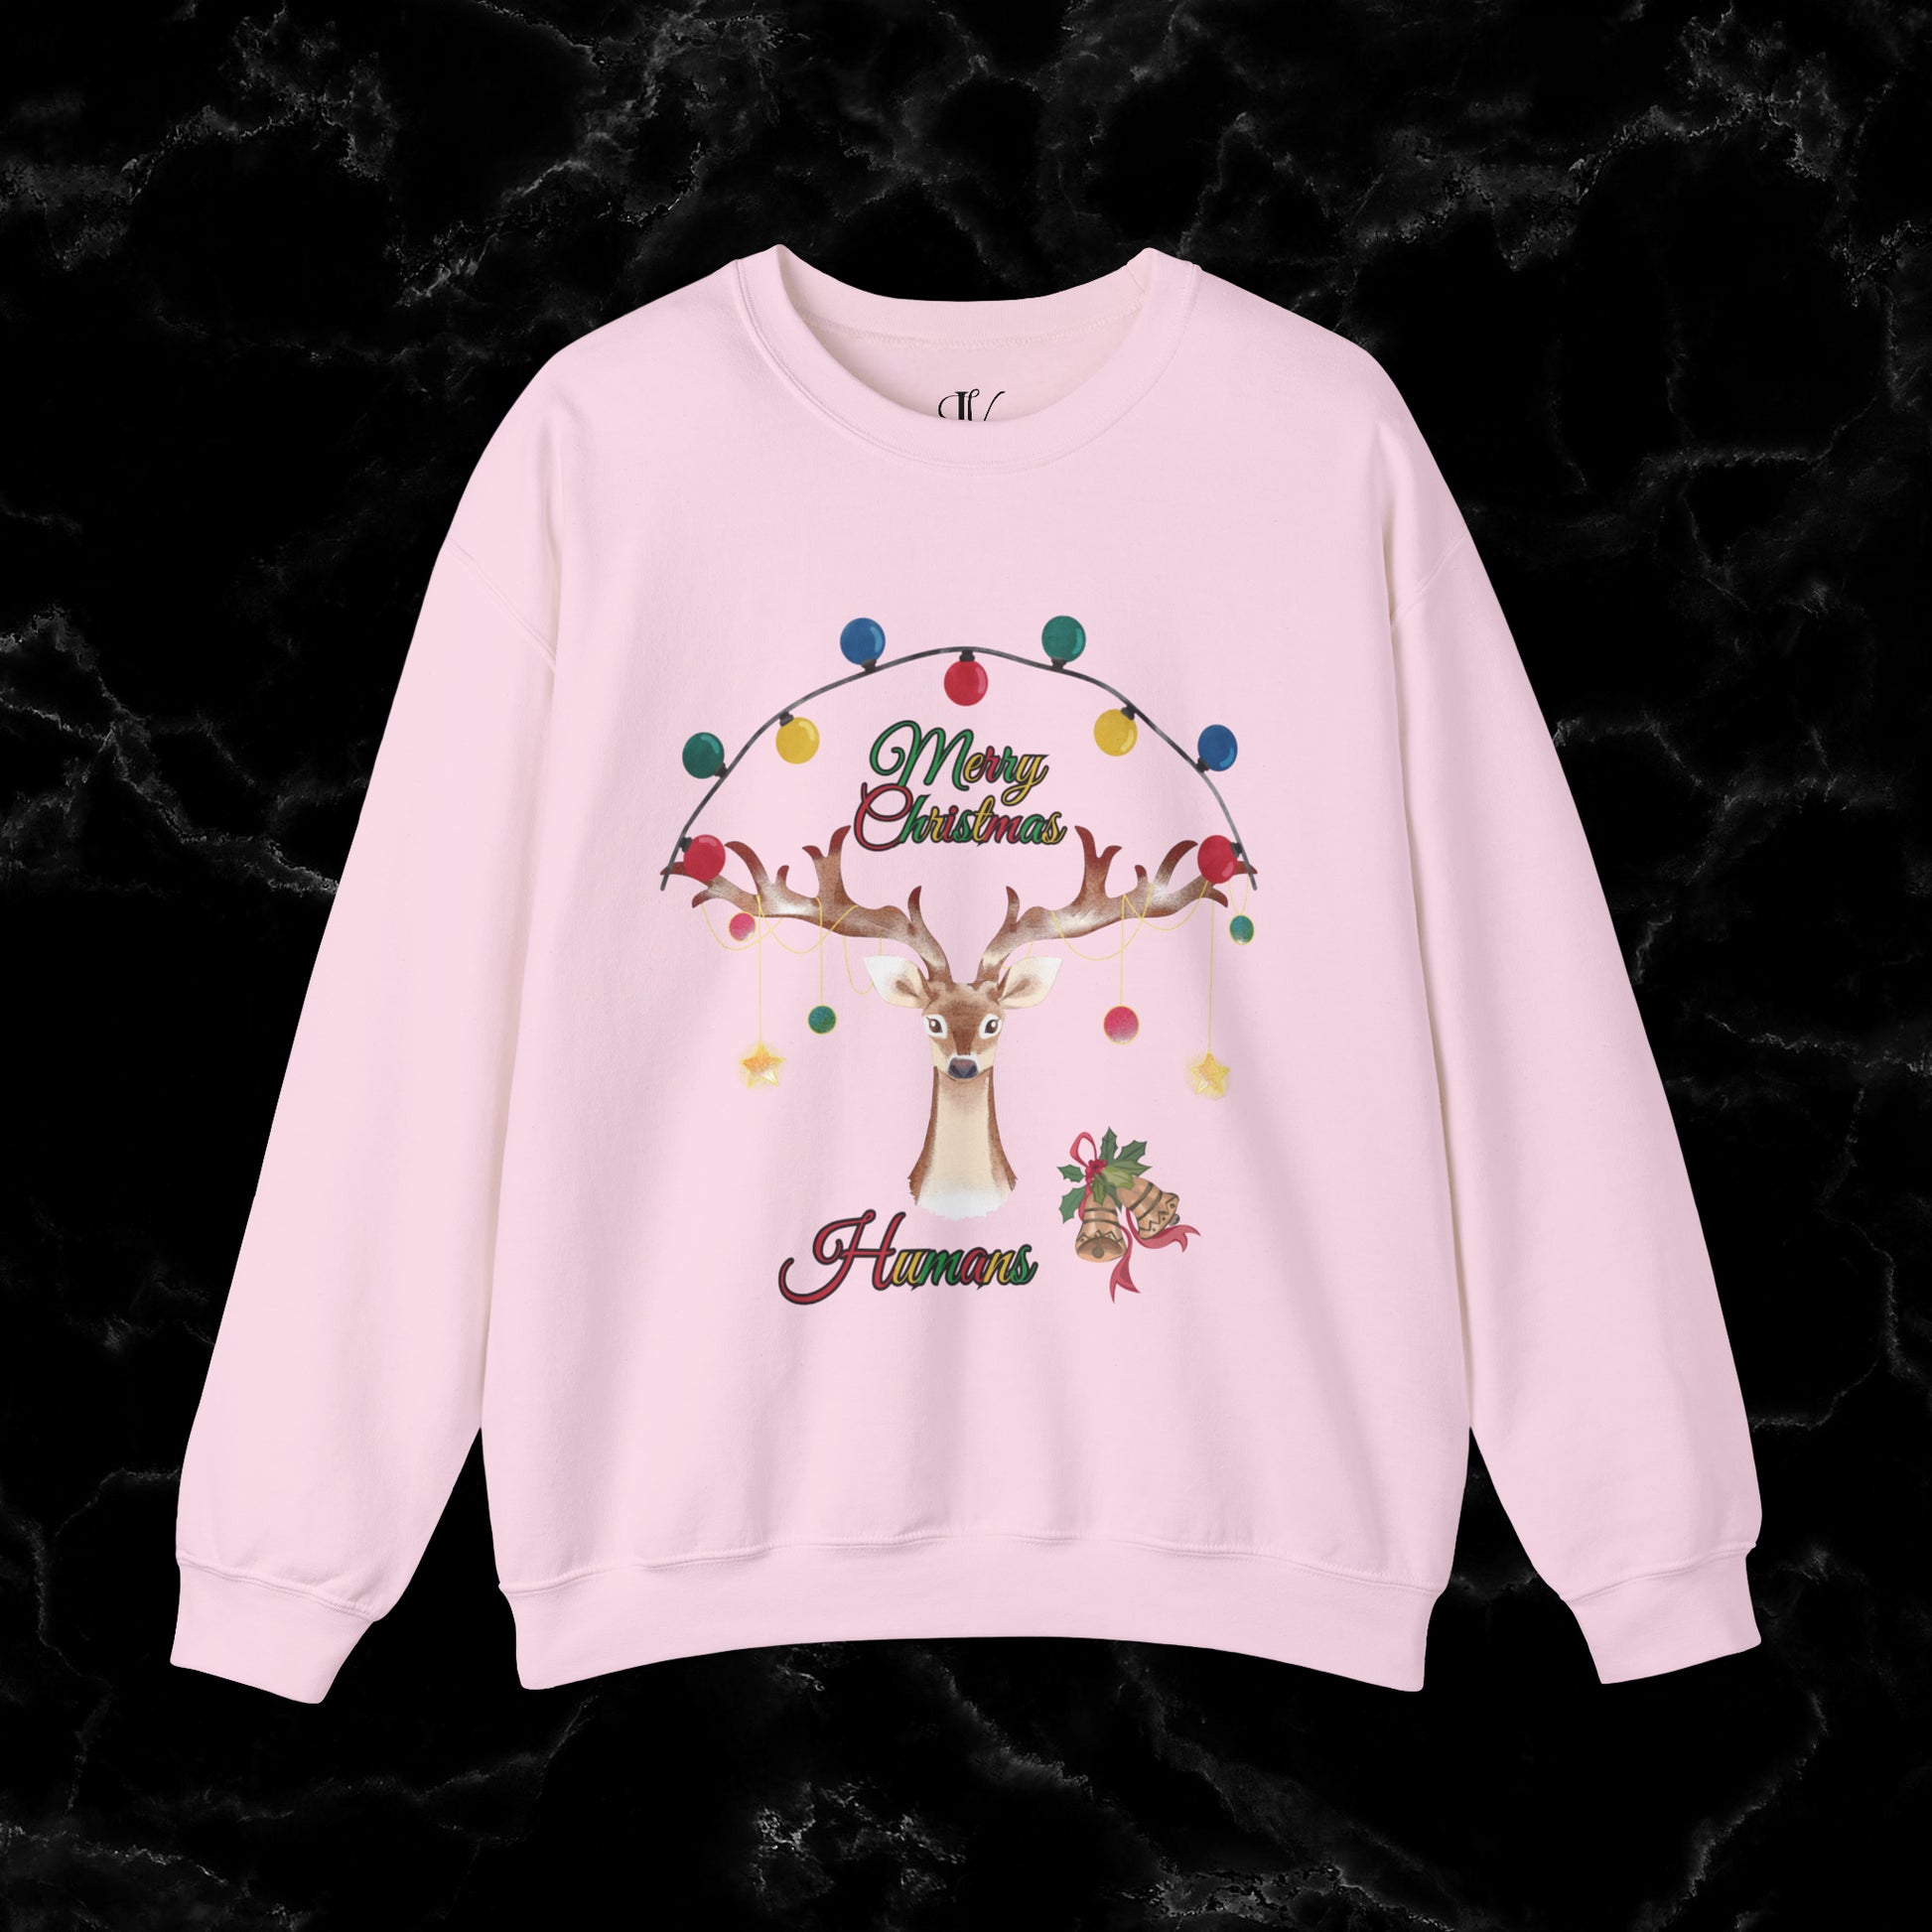 Merry Christmas Reindeer Sweatshirt - Christmas Crewneck for Festive Holiday Cheer | 'Merry Christmas Humans' Sweatshirt S Light Pink 